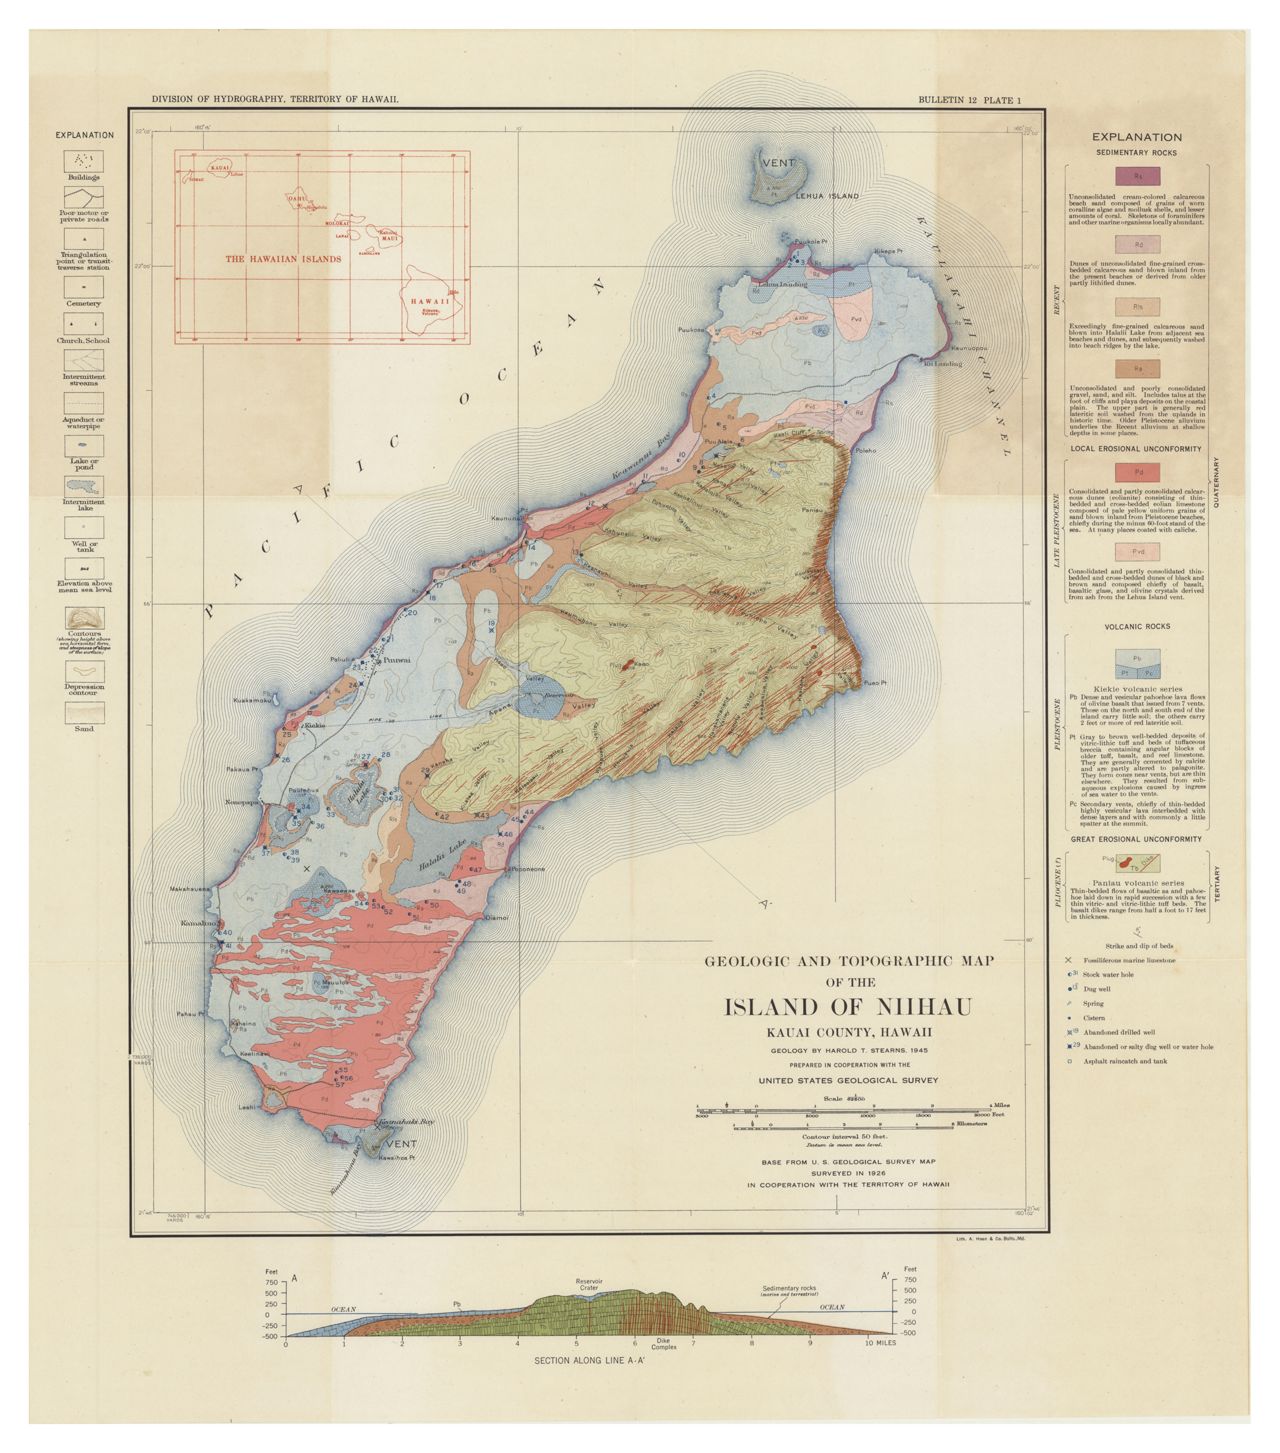 1945 Geologic and Topographic Map of the Island of Niihau